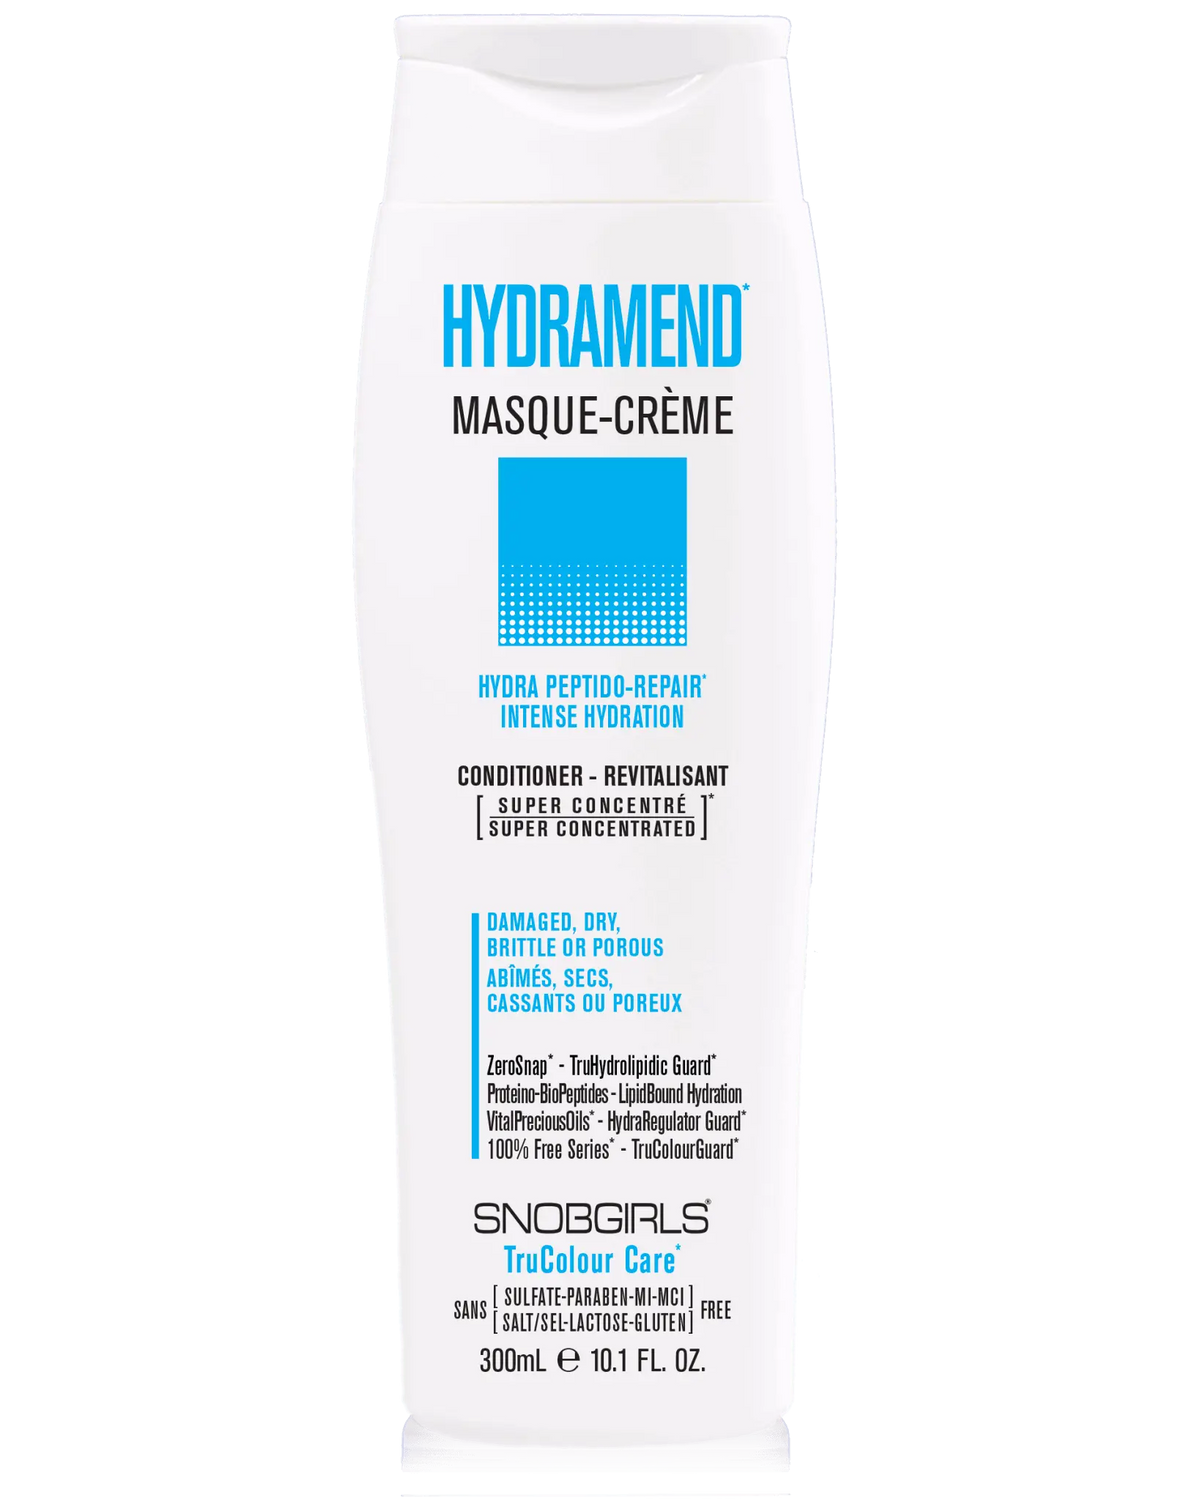 HYDRAMEND Masque-Creme (conditioner) 10.1 FL. OZ. - SNOBGIRLS.com